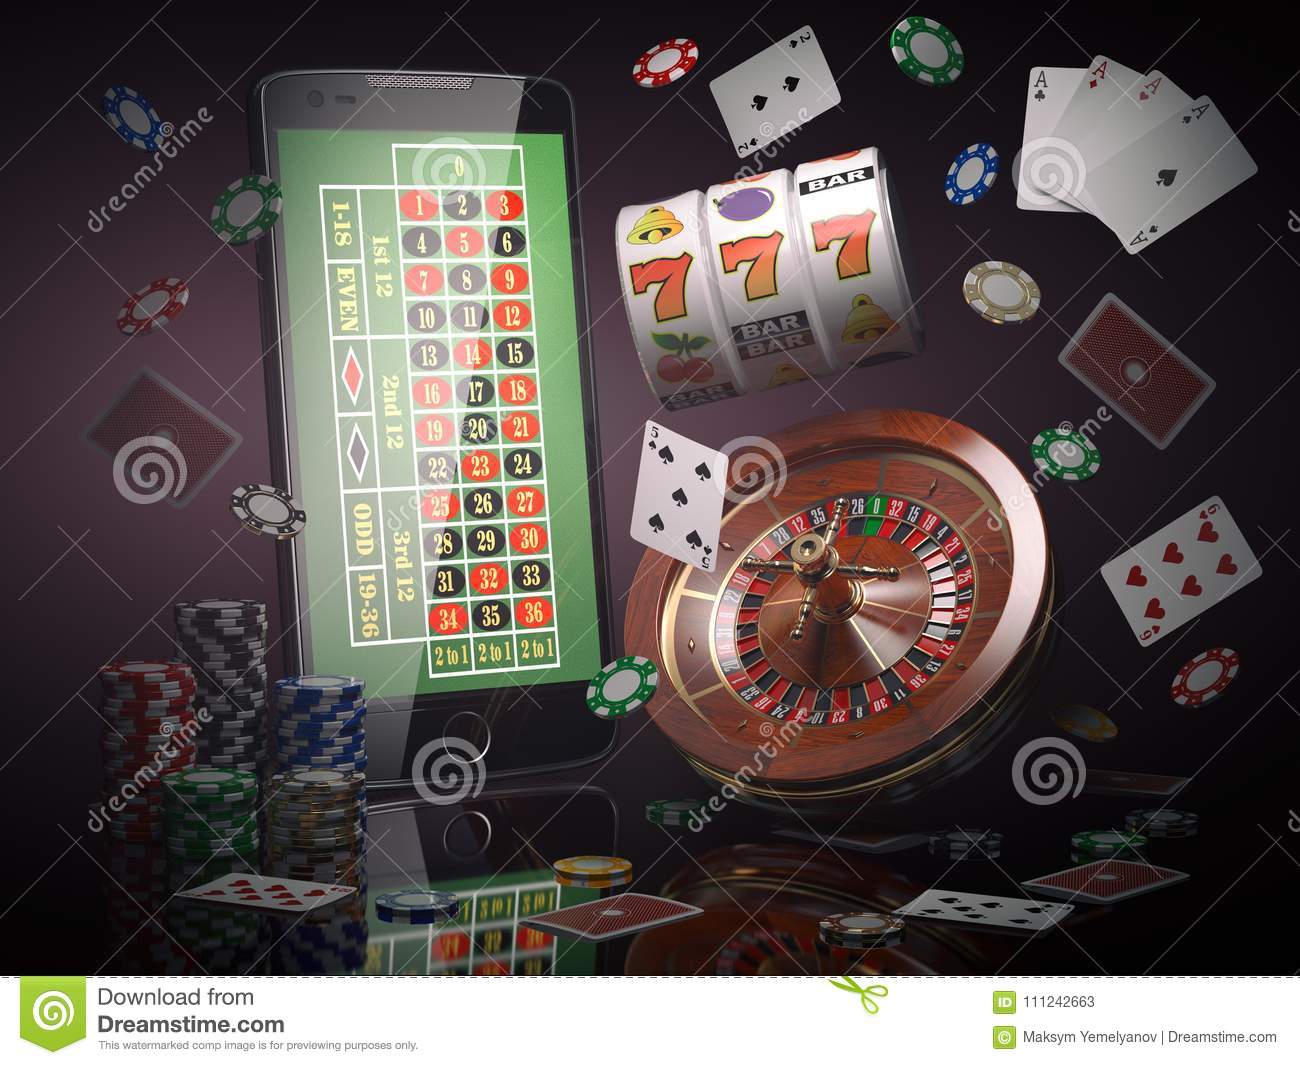 Online casino visa gift card